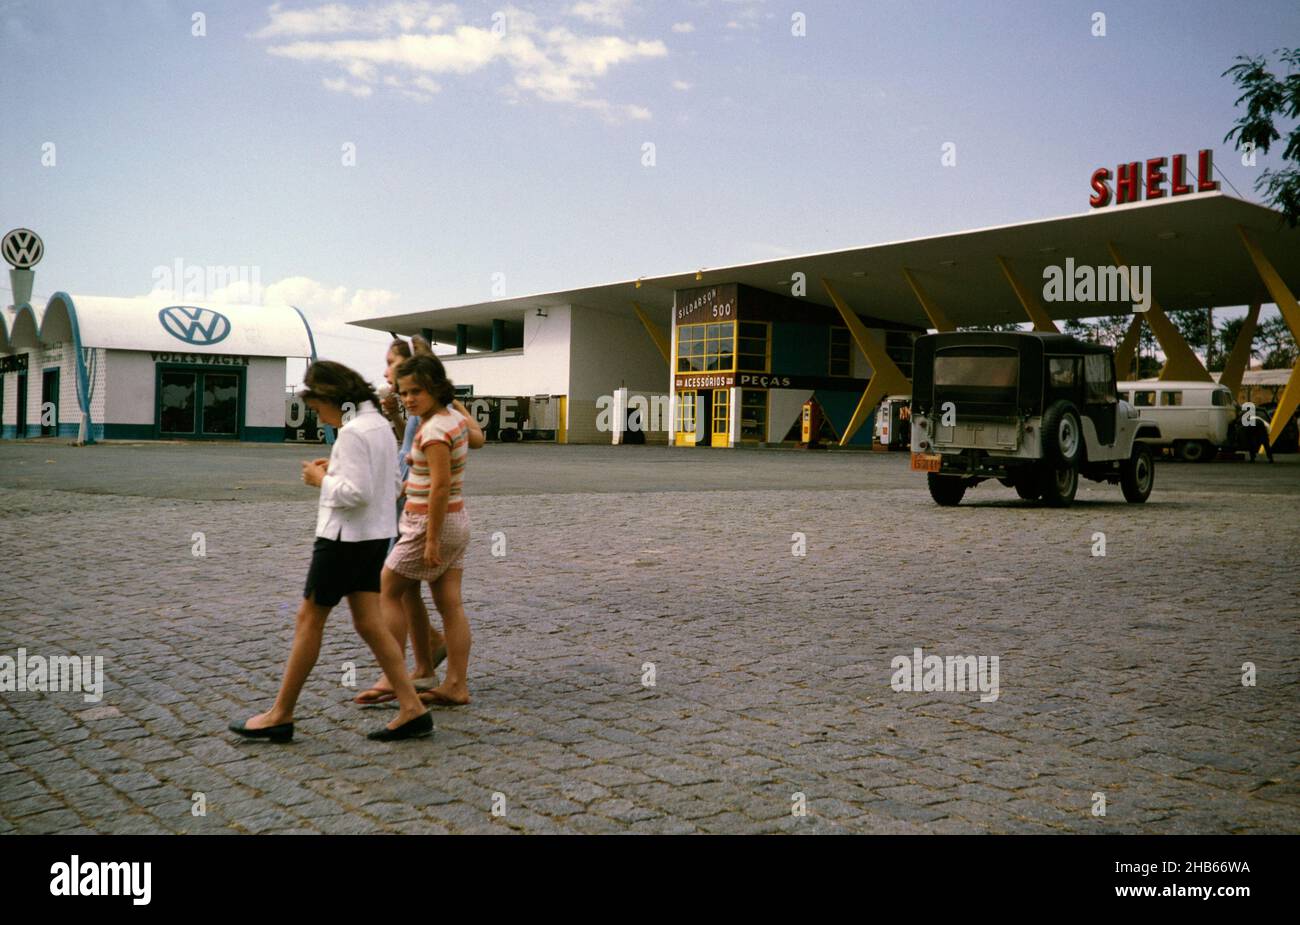 Shell petrol station near Sao Paulo, Brazil, 1962 Volkswagen car dealership in background Stock Photo